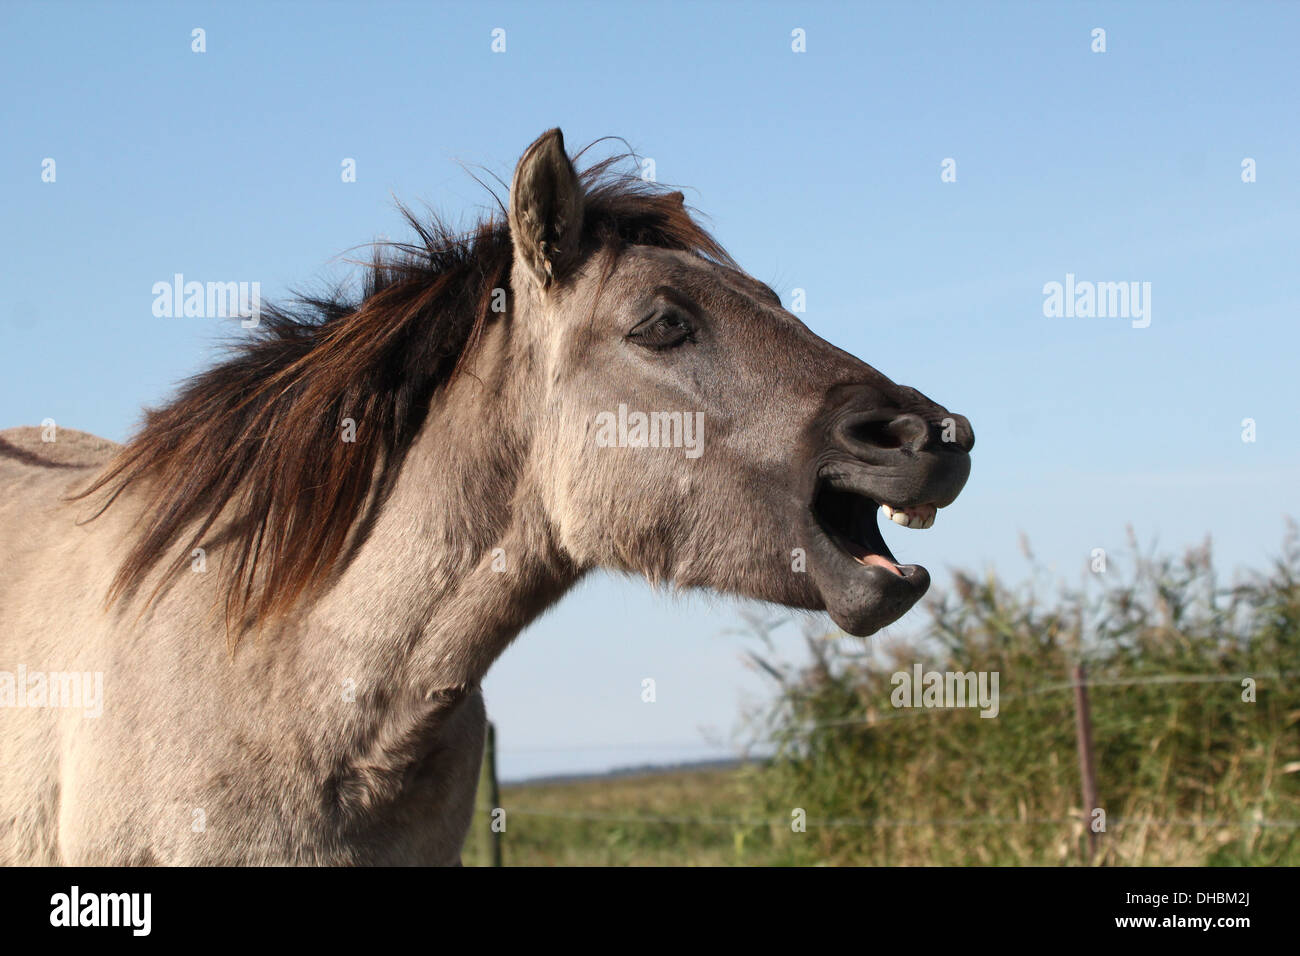 Exuberant Polish primitive horse a.k.a. Konik Horse neighing Stock Photo